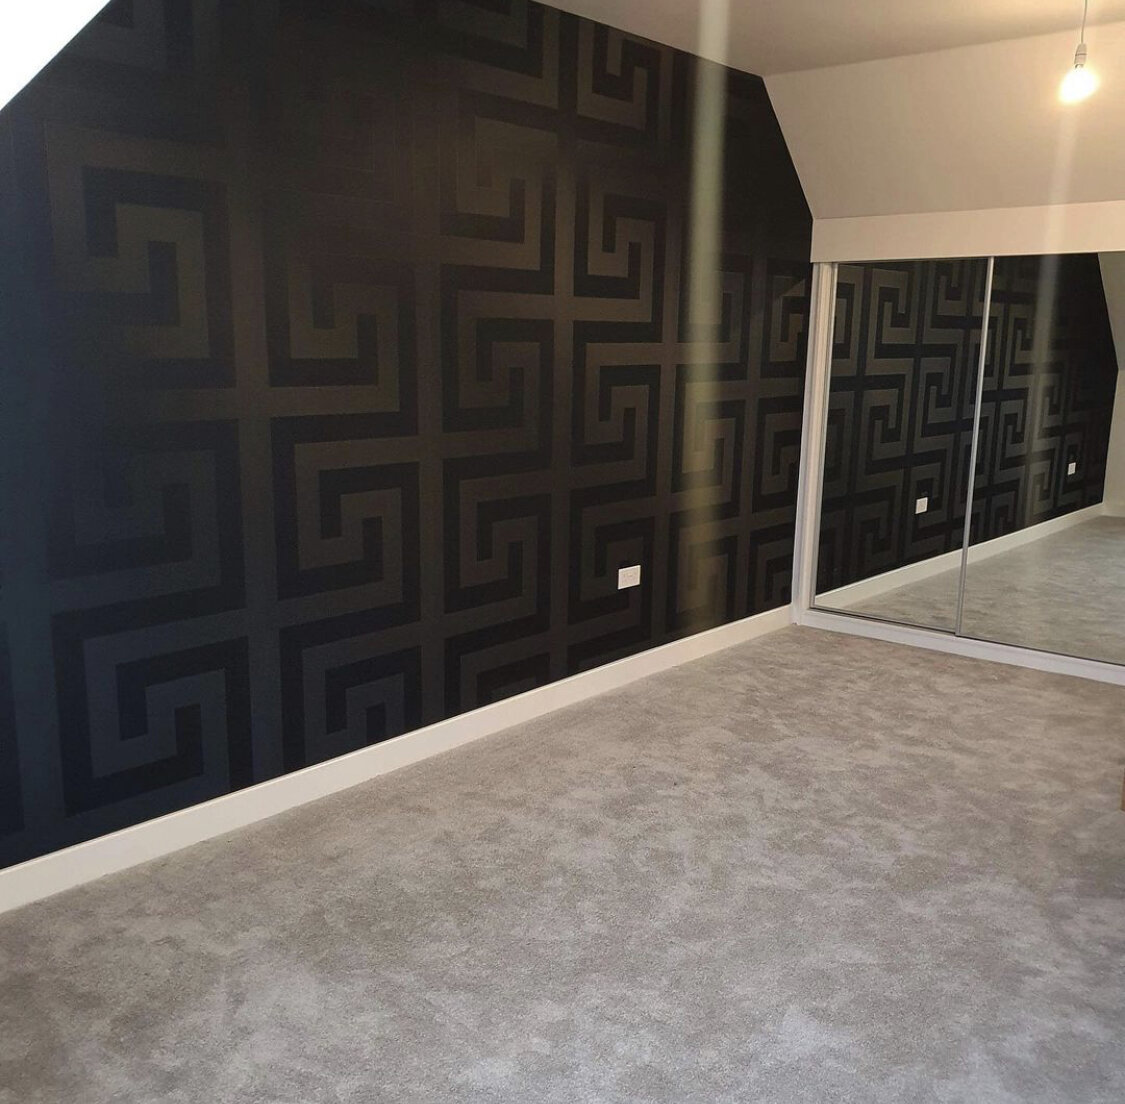 Versace Greek Key Designer Wallpaper in Black Full Roll